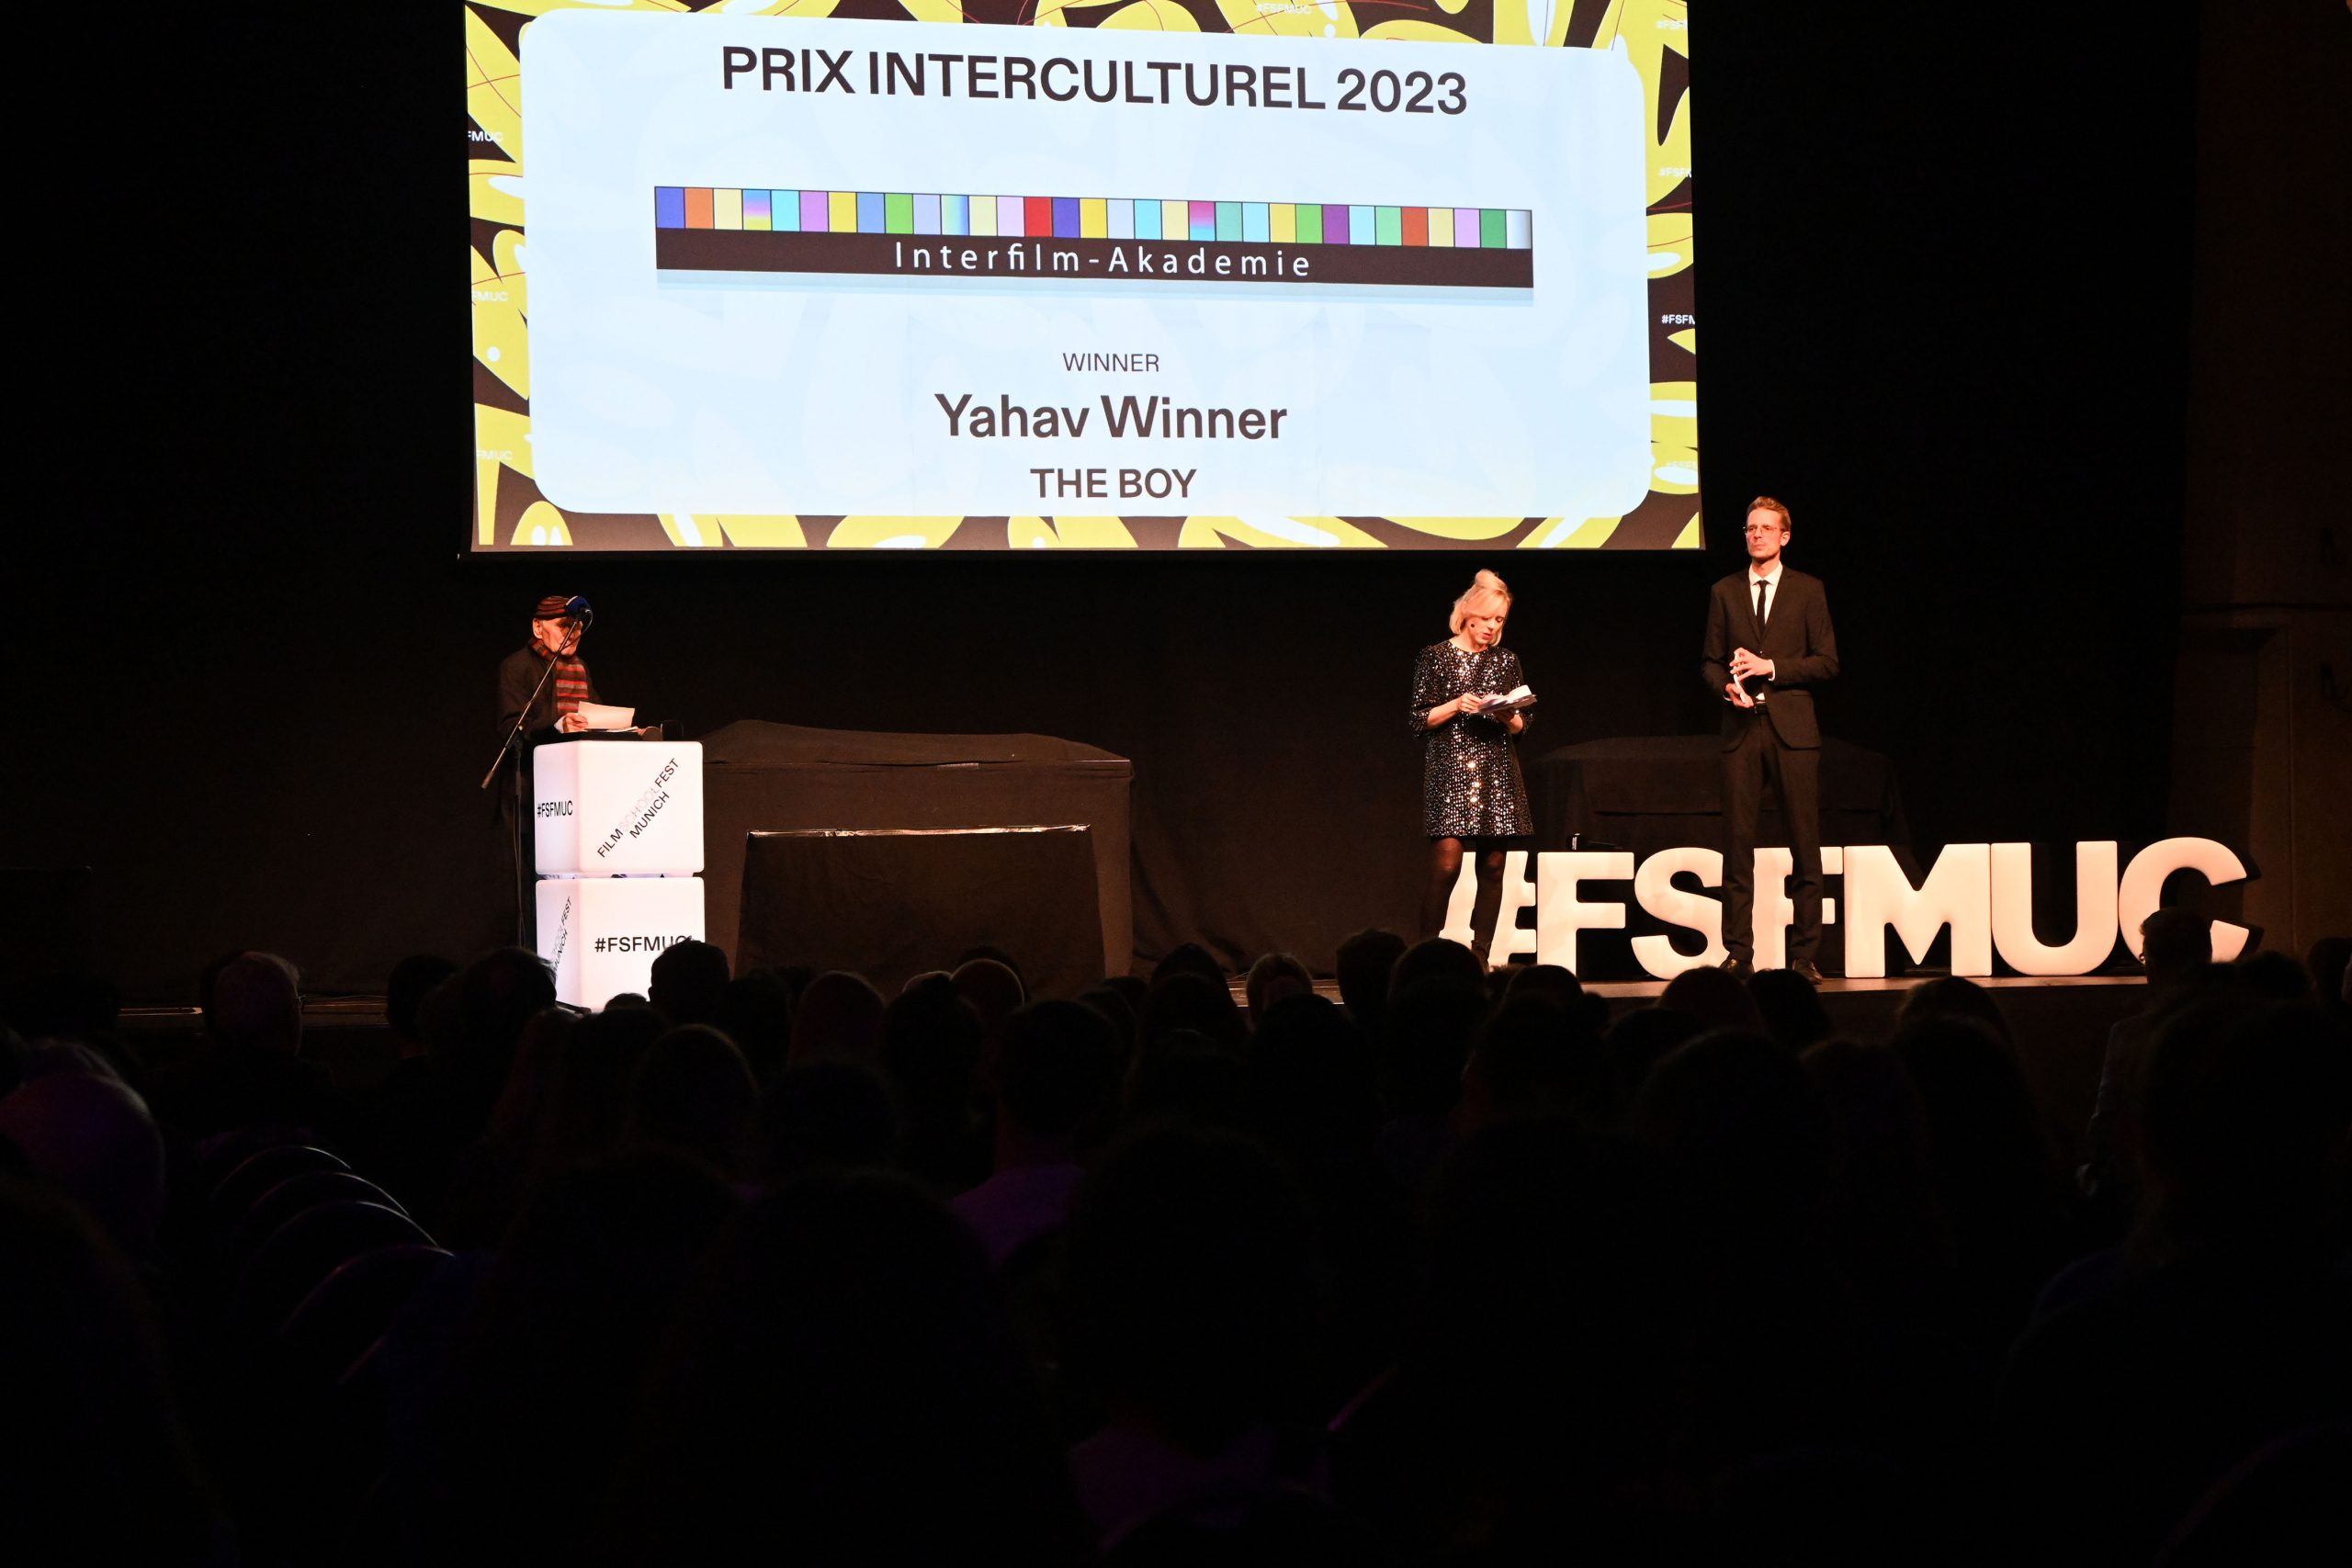 Prix Interculturel 2023 Preisverleihung 3